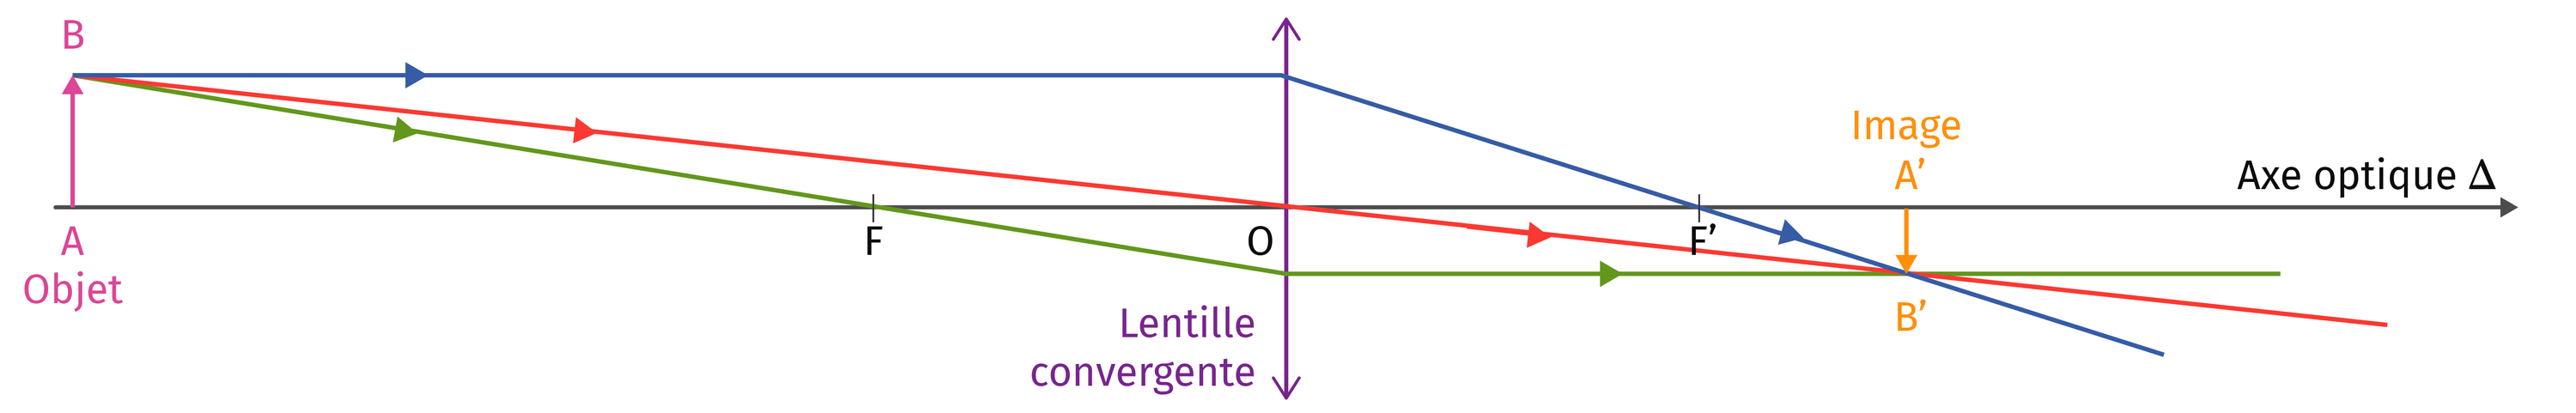 Lentille convergente